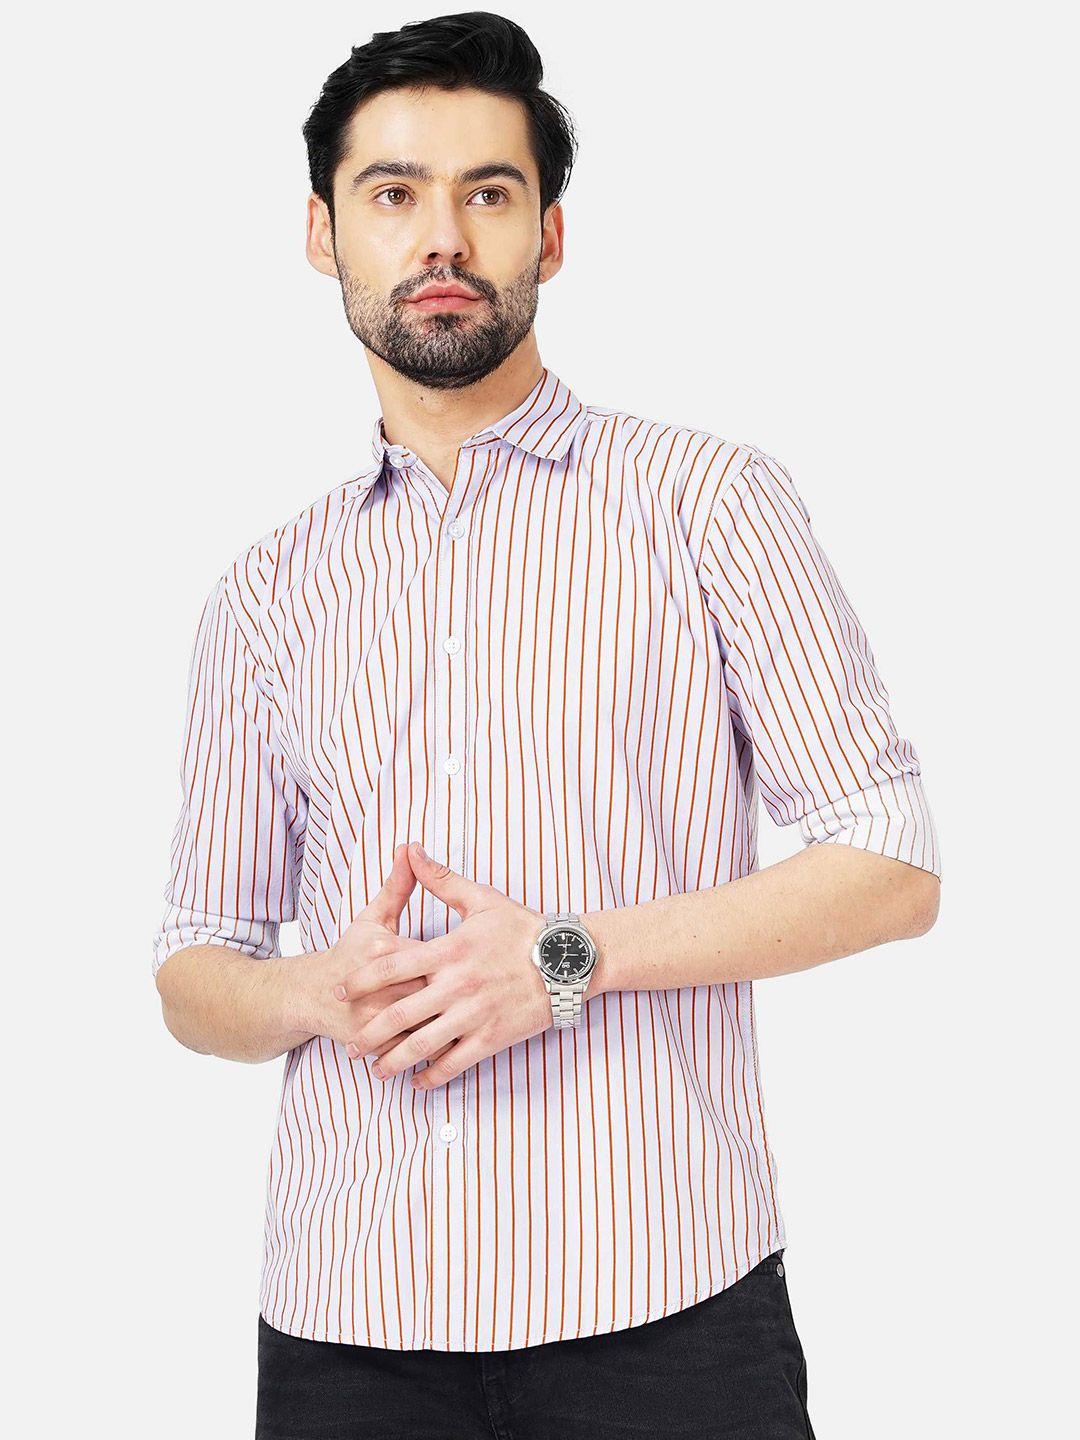 soratia-men-slim-fit-striped-cotton-casual-shirt